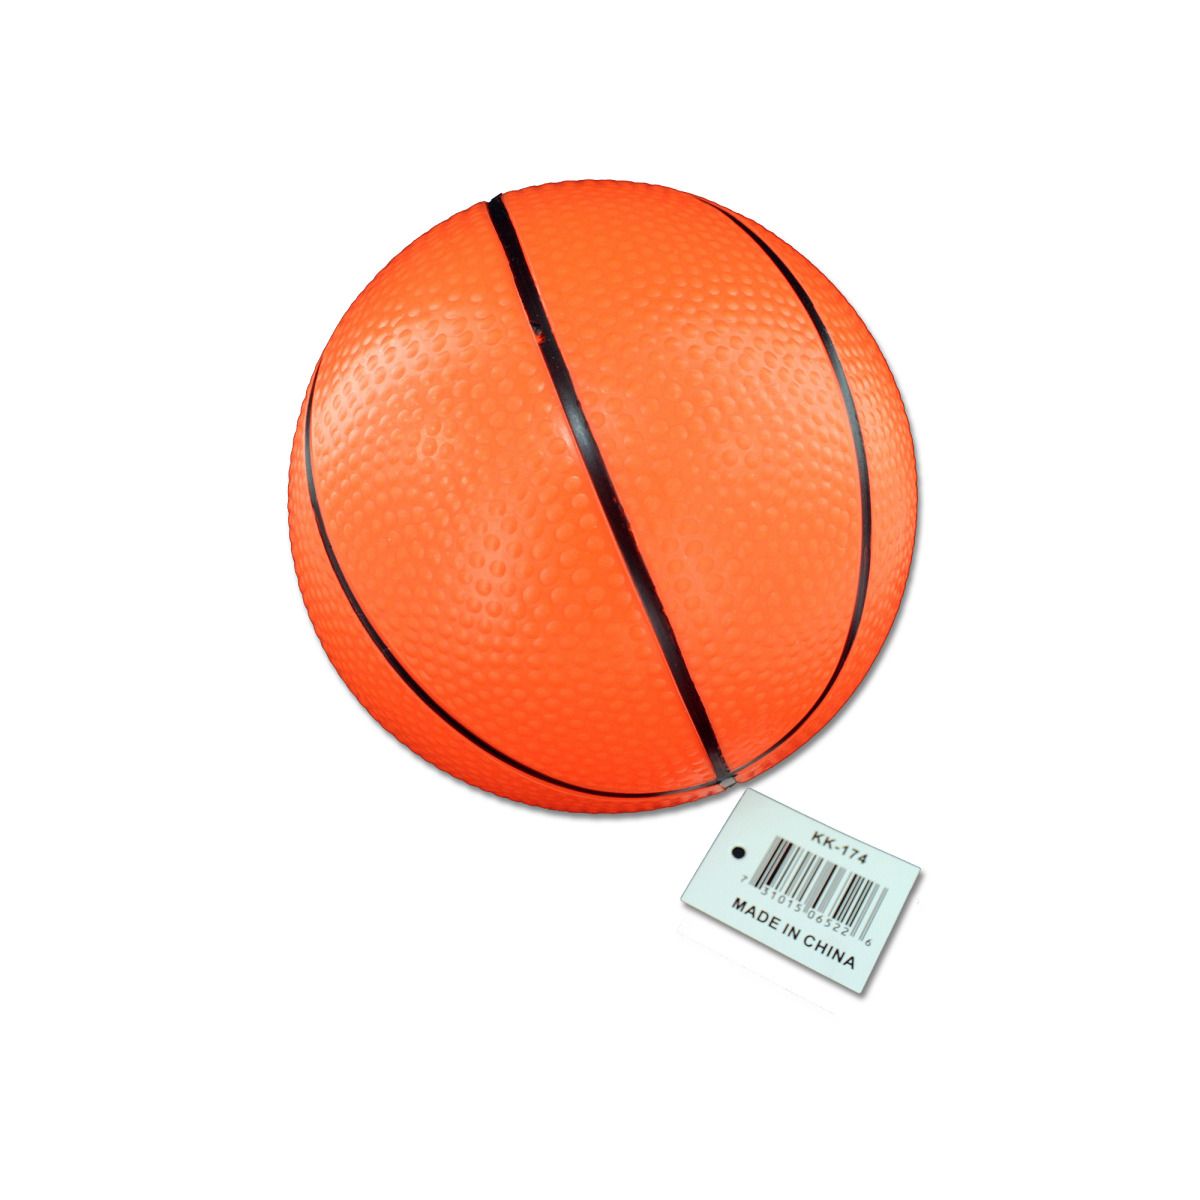   Wholesale Case Lot 40 Orange Black Small Soft Toy Basketballs 4.5 Inch